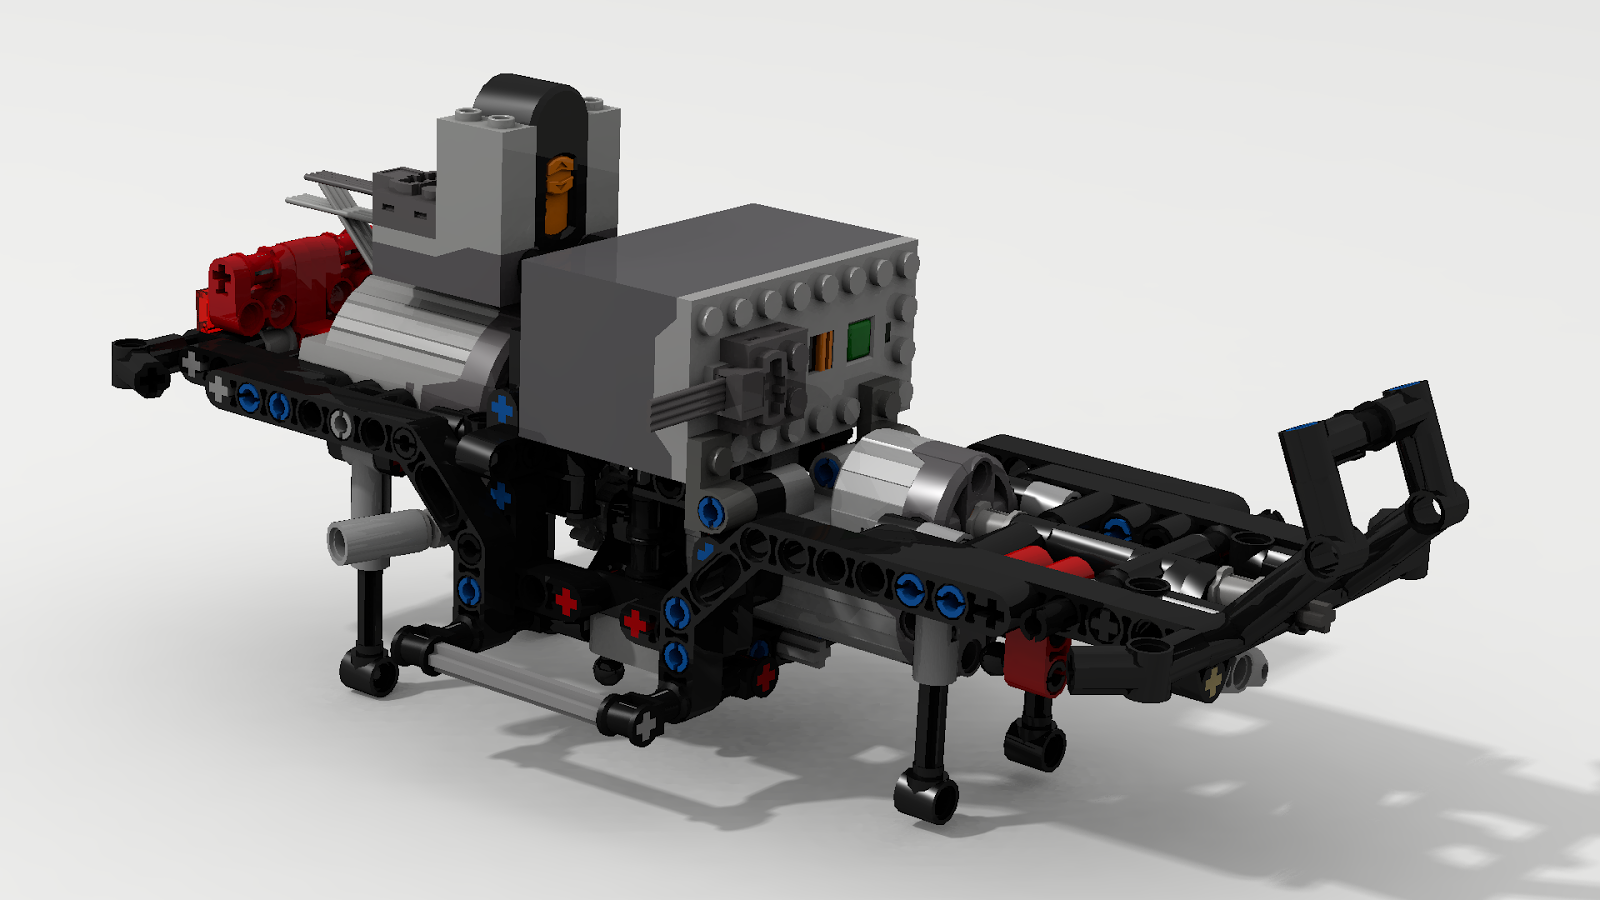 filsawgood Lego Technic Creations: Lego Technic Suzuki Trial - instriction